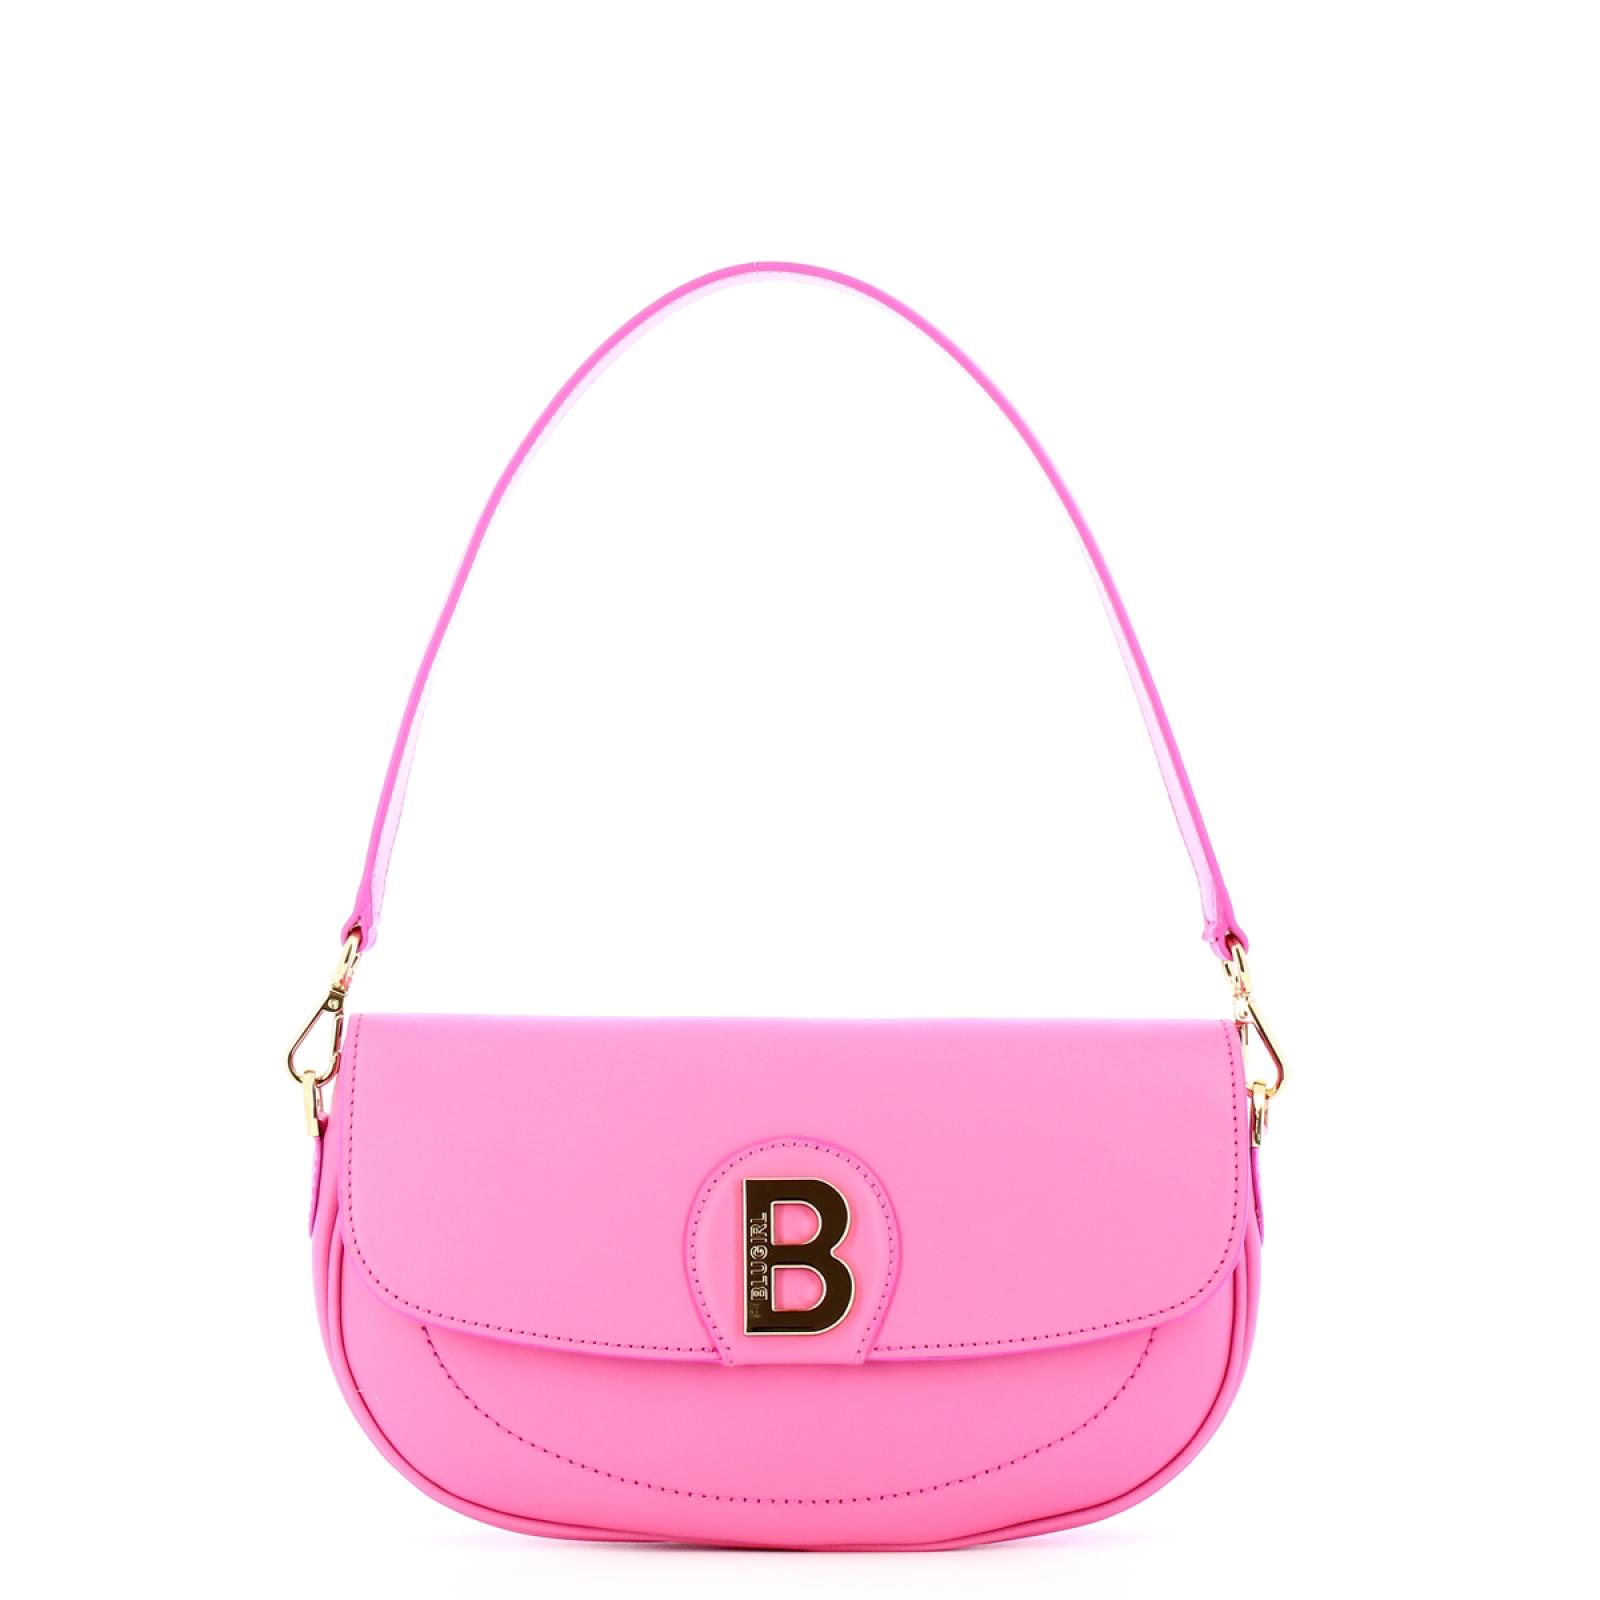 Blugirl Hobo Bag S Auore Pink - 1